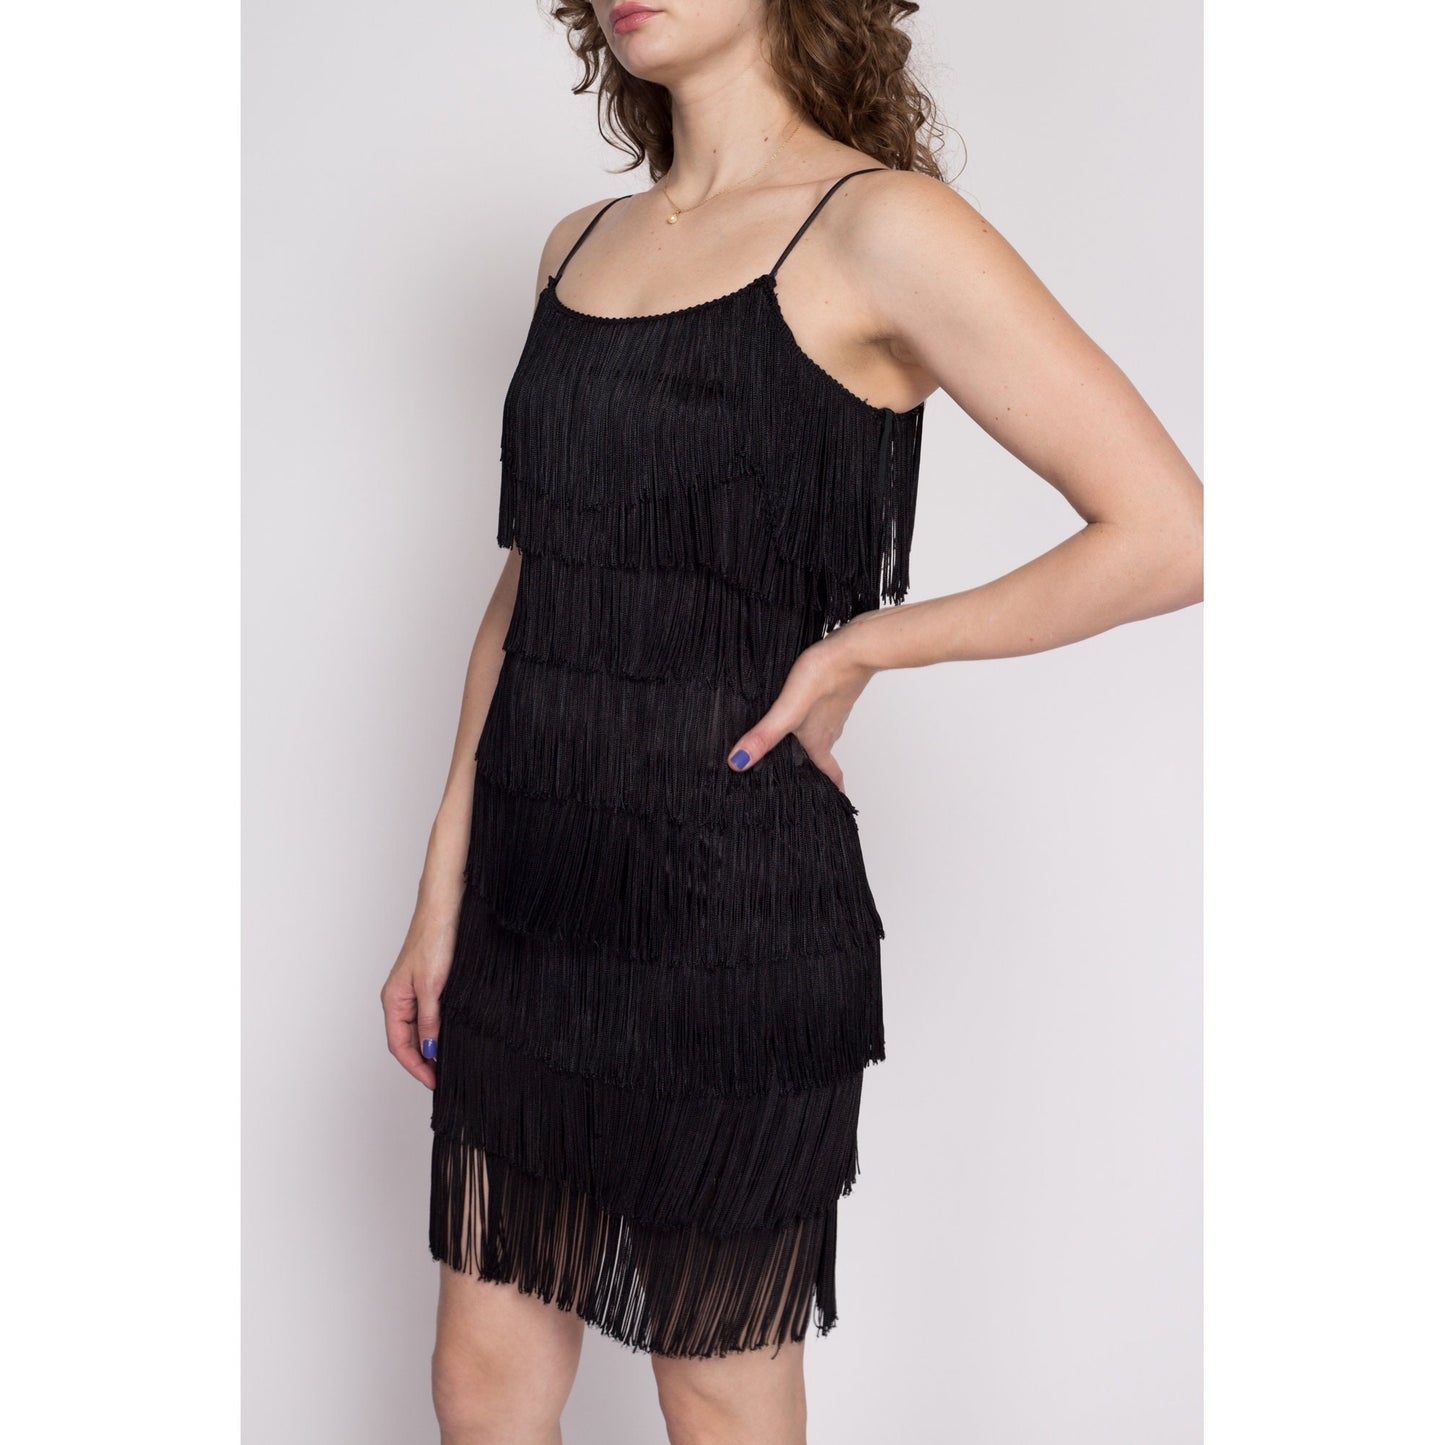 XS-S| 90s Black Fringe Flapper Dress - XS to Small | Vintage 1920s Costume Mini Party Dress